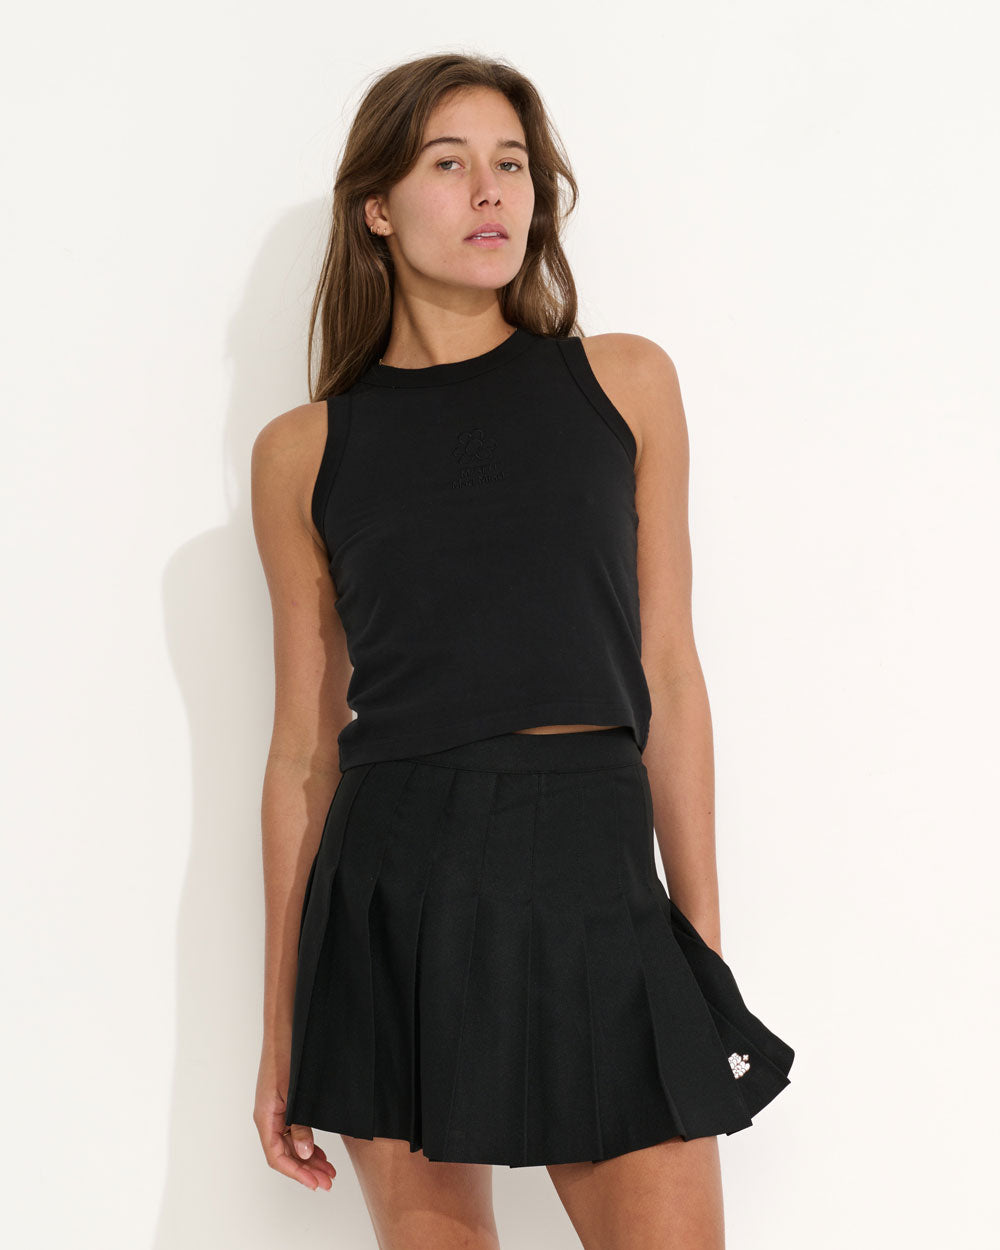 Finesse x X-Girl Tennis Skirt Black RGB300-BLK